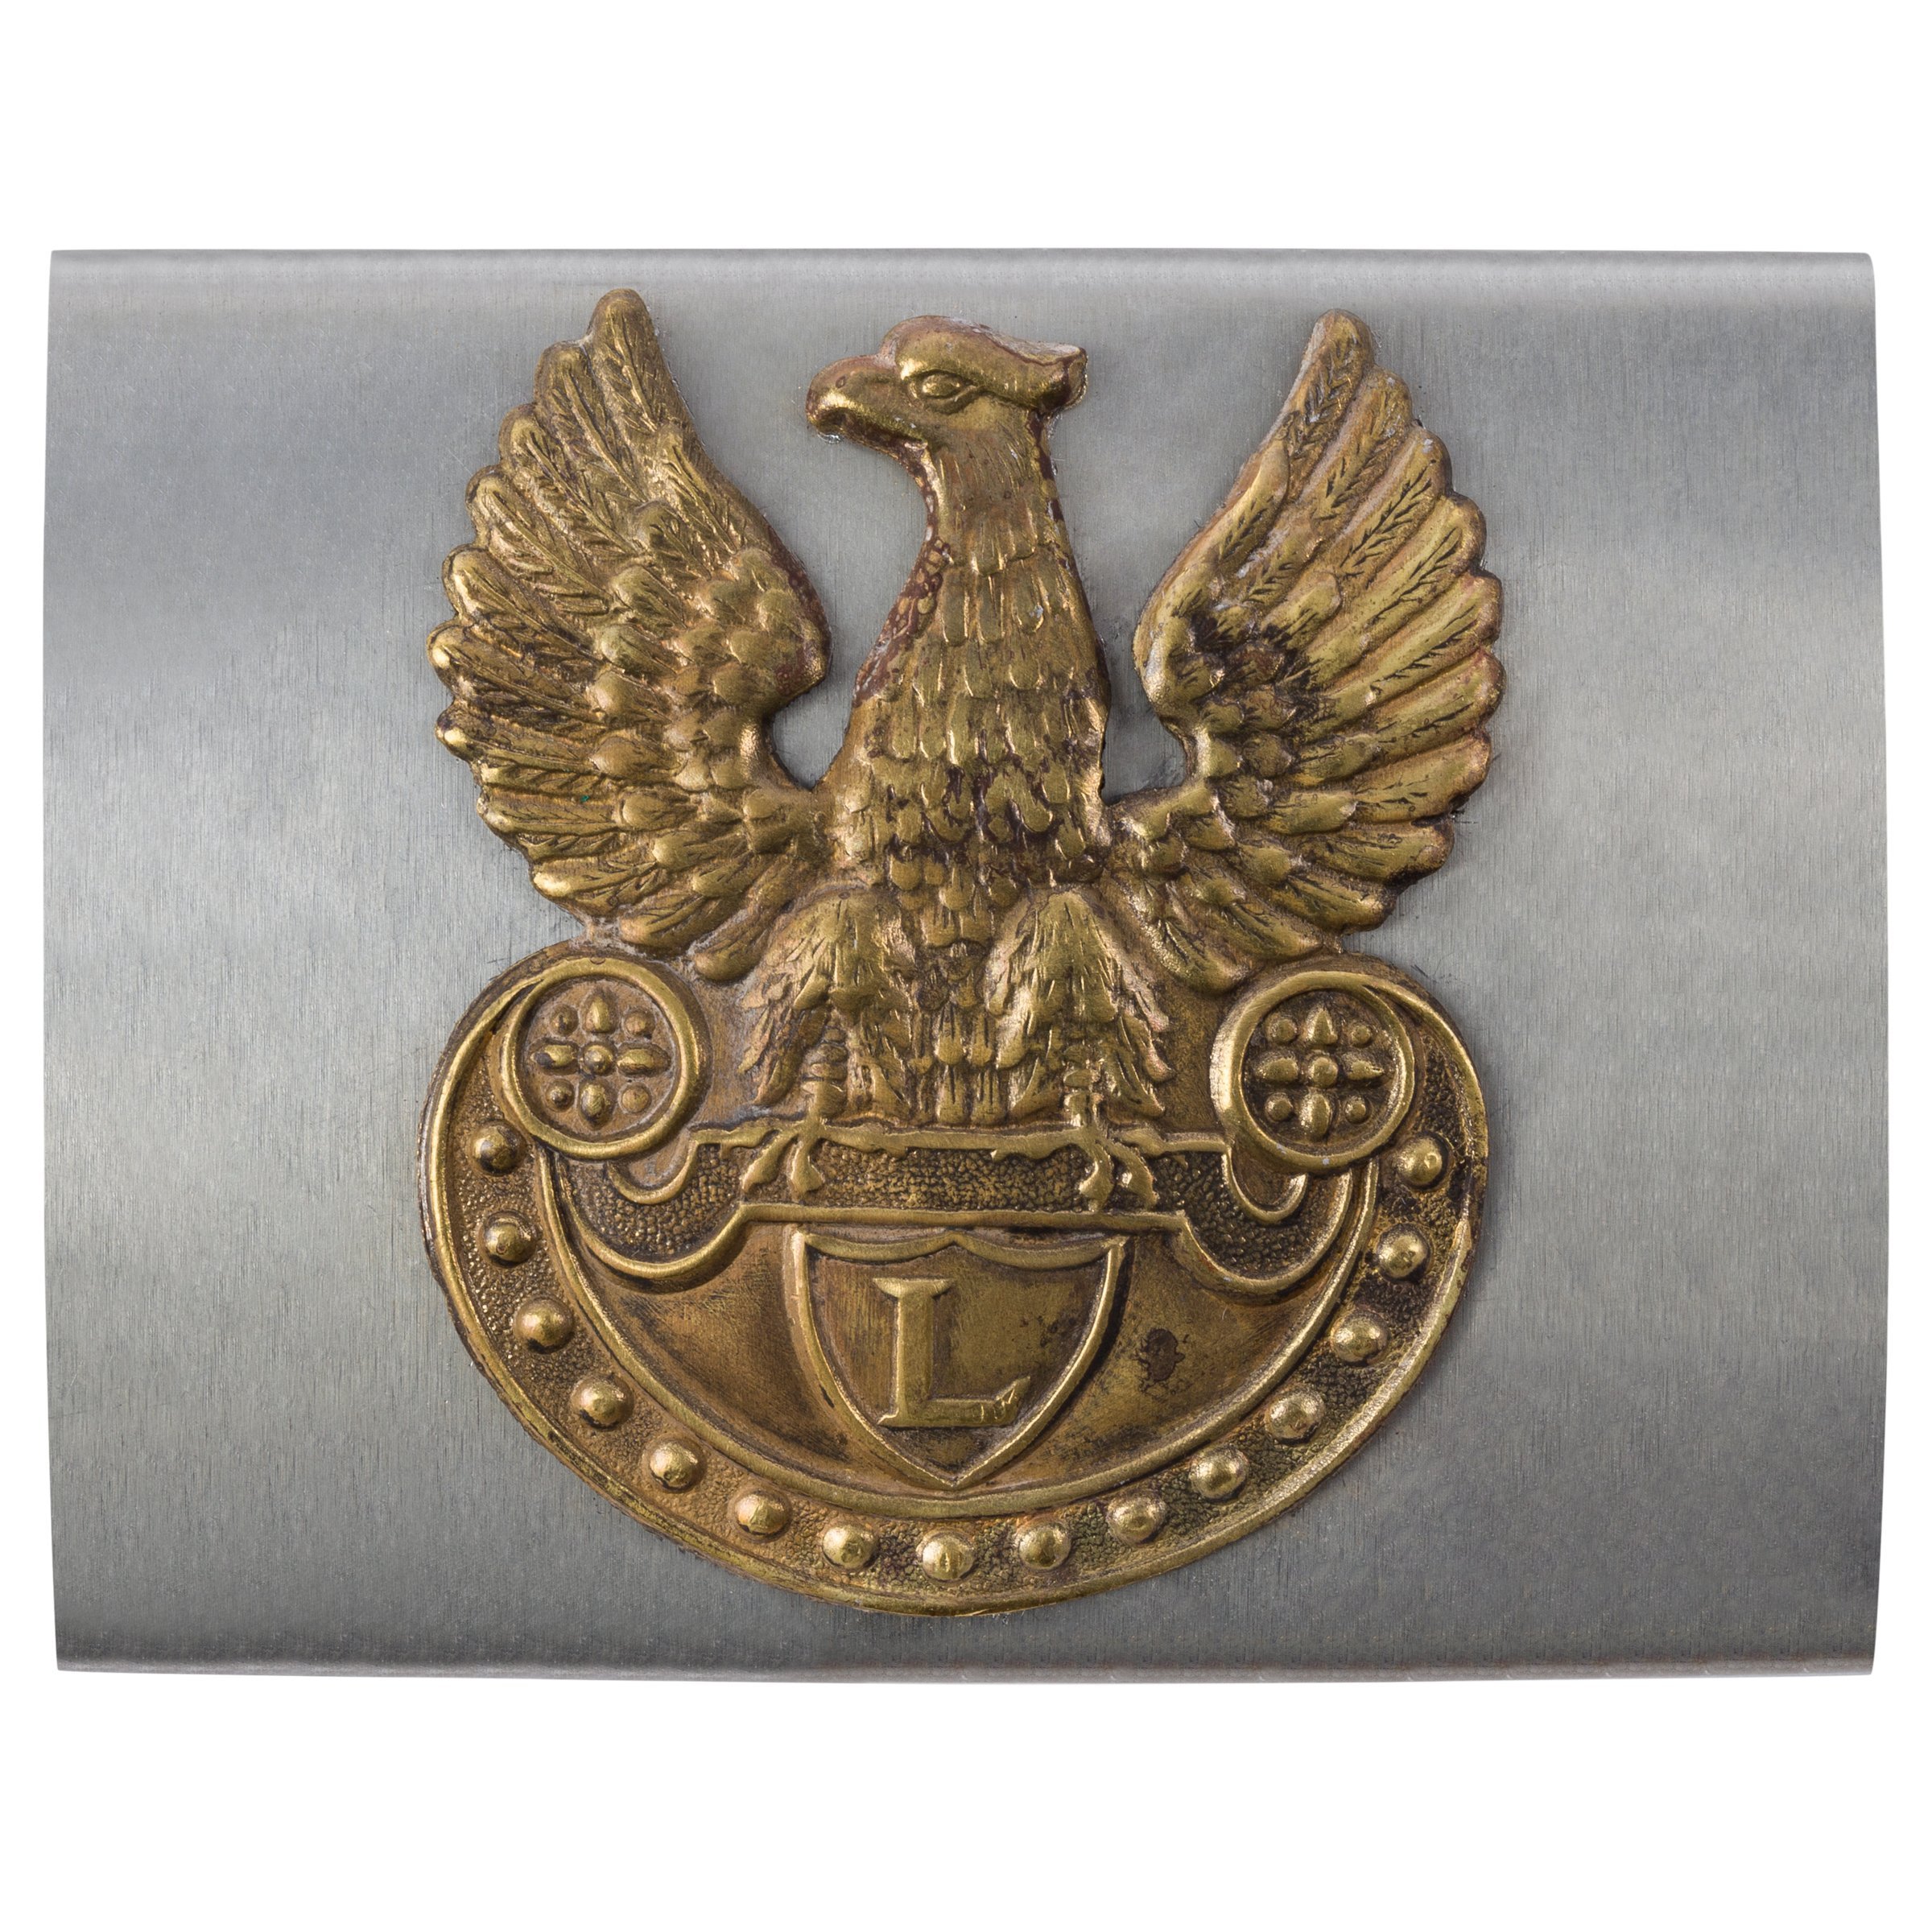 Polish Legions belt buckle, steel version with brass eagle - repro 24,75 €